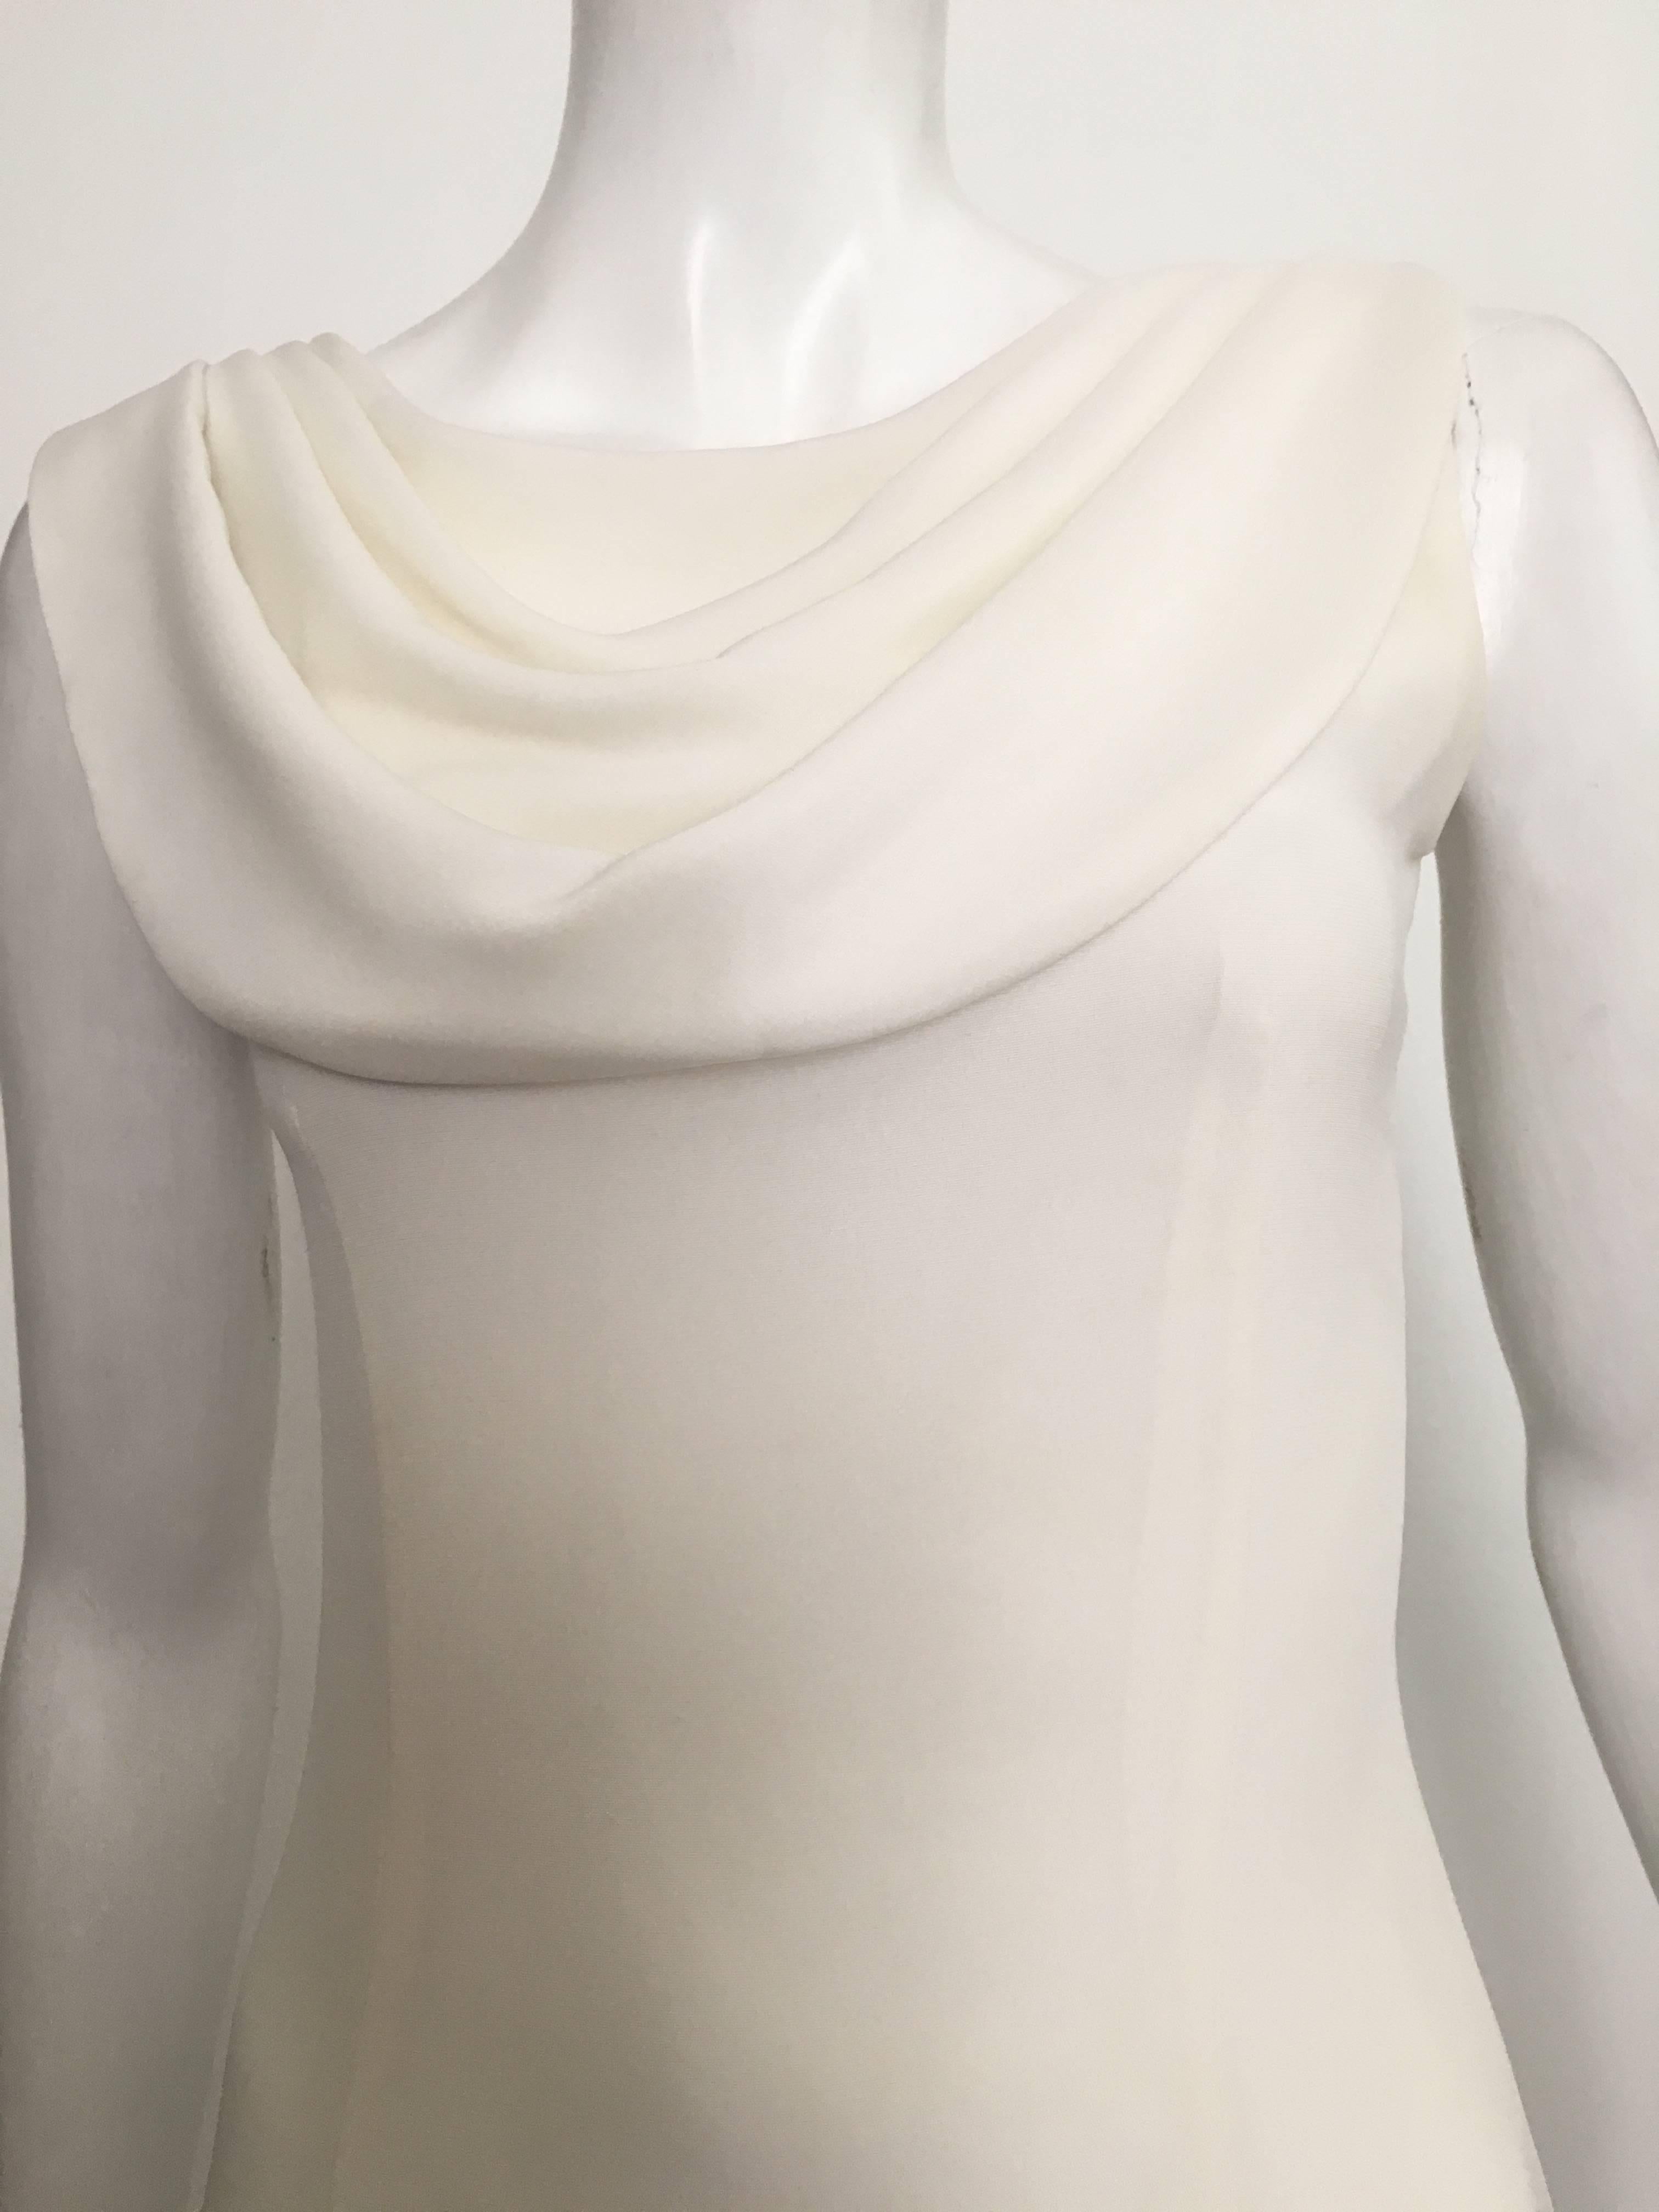 Scaasi Off White Long Sheath Evening Dress Size 4. 2